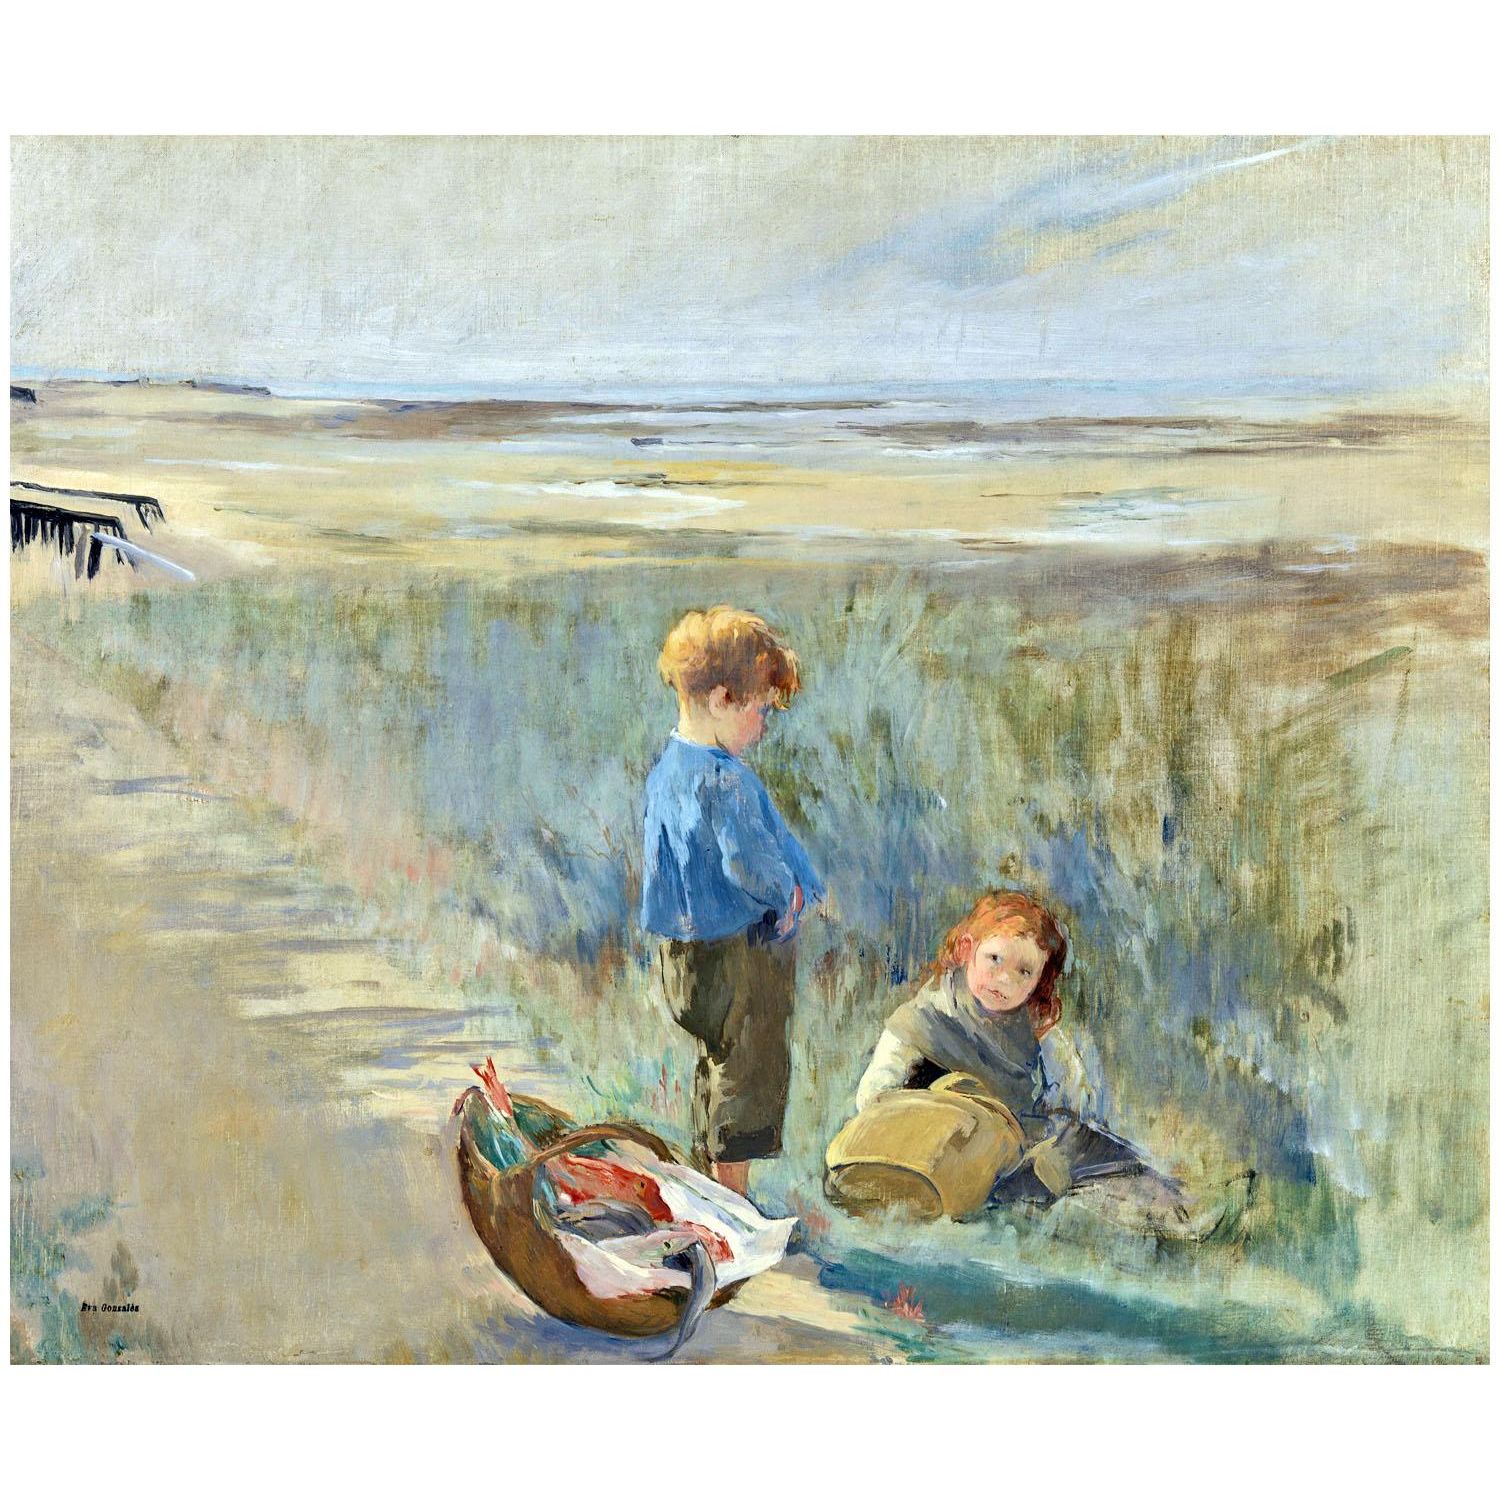 Eva Gonzales. Enfants sur les dunes, Grandcamp. 1878. NGI Dublin